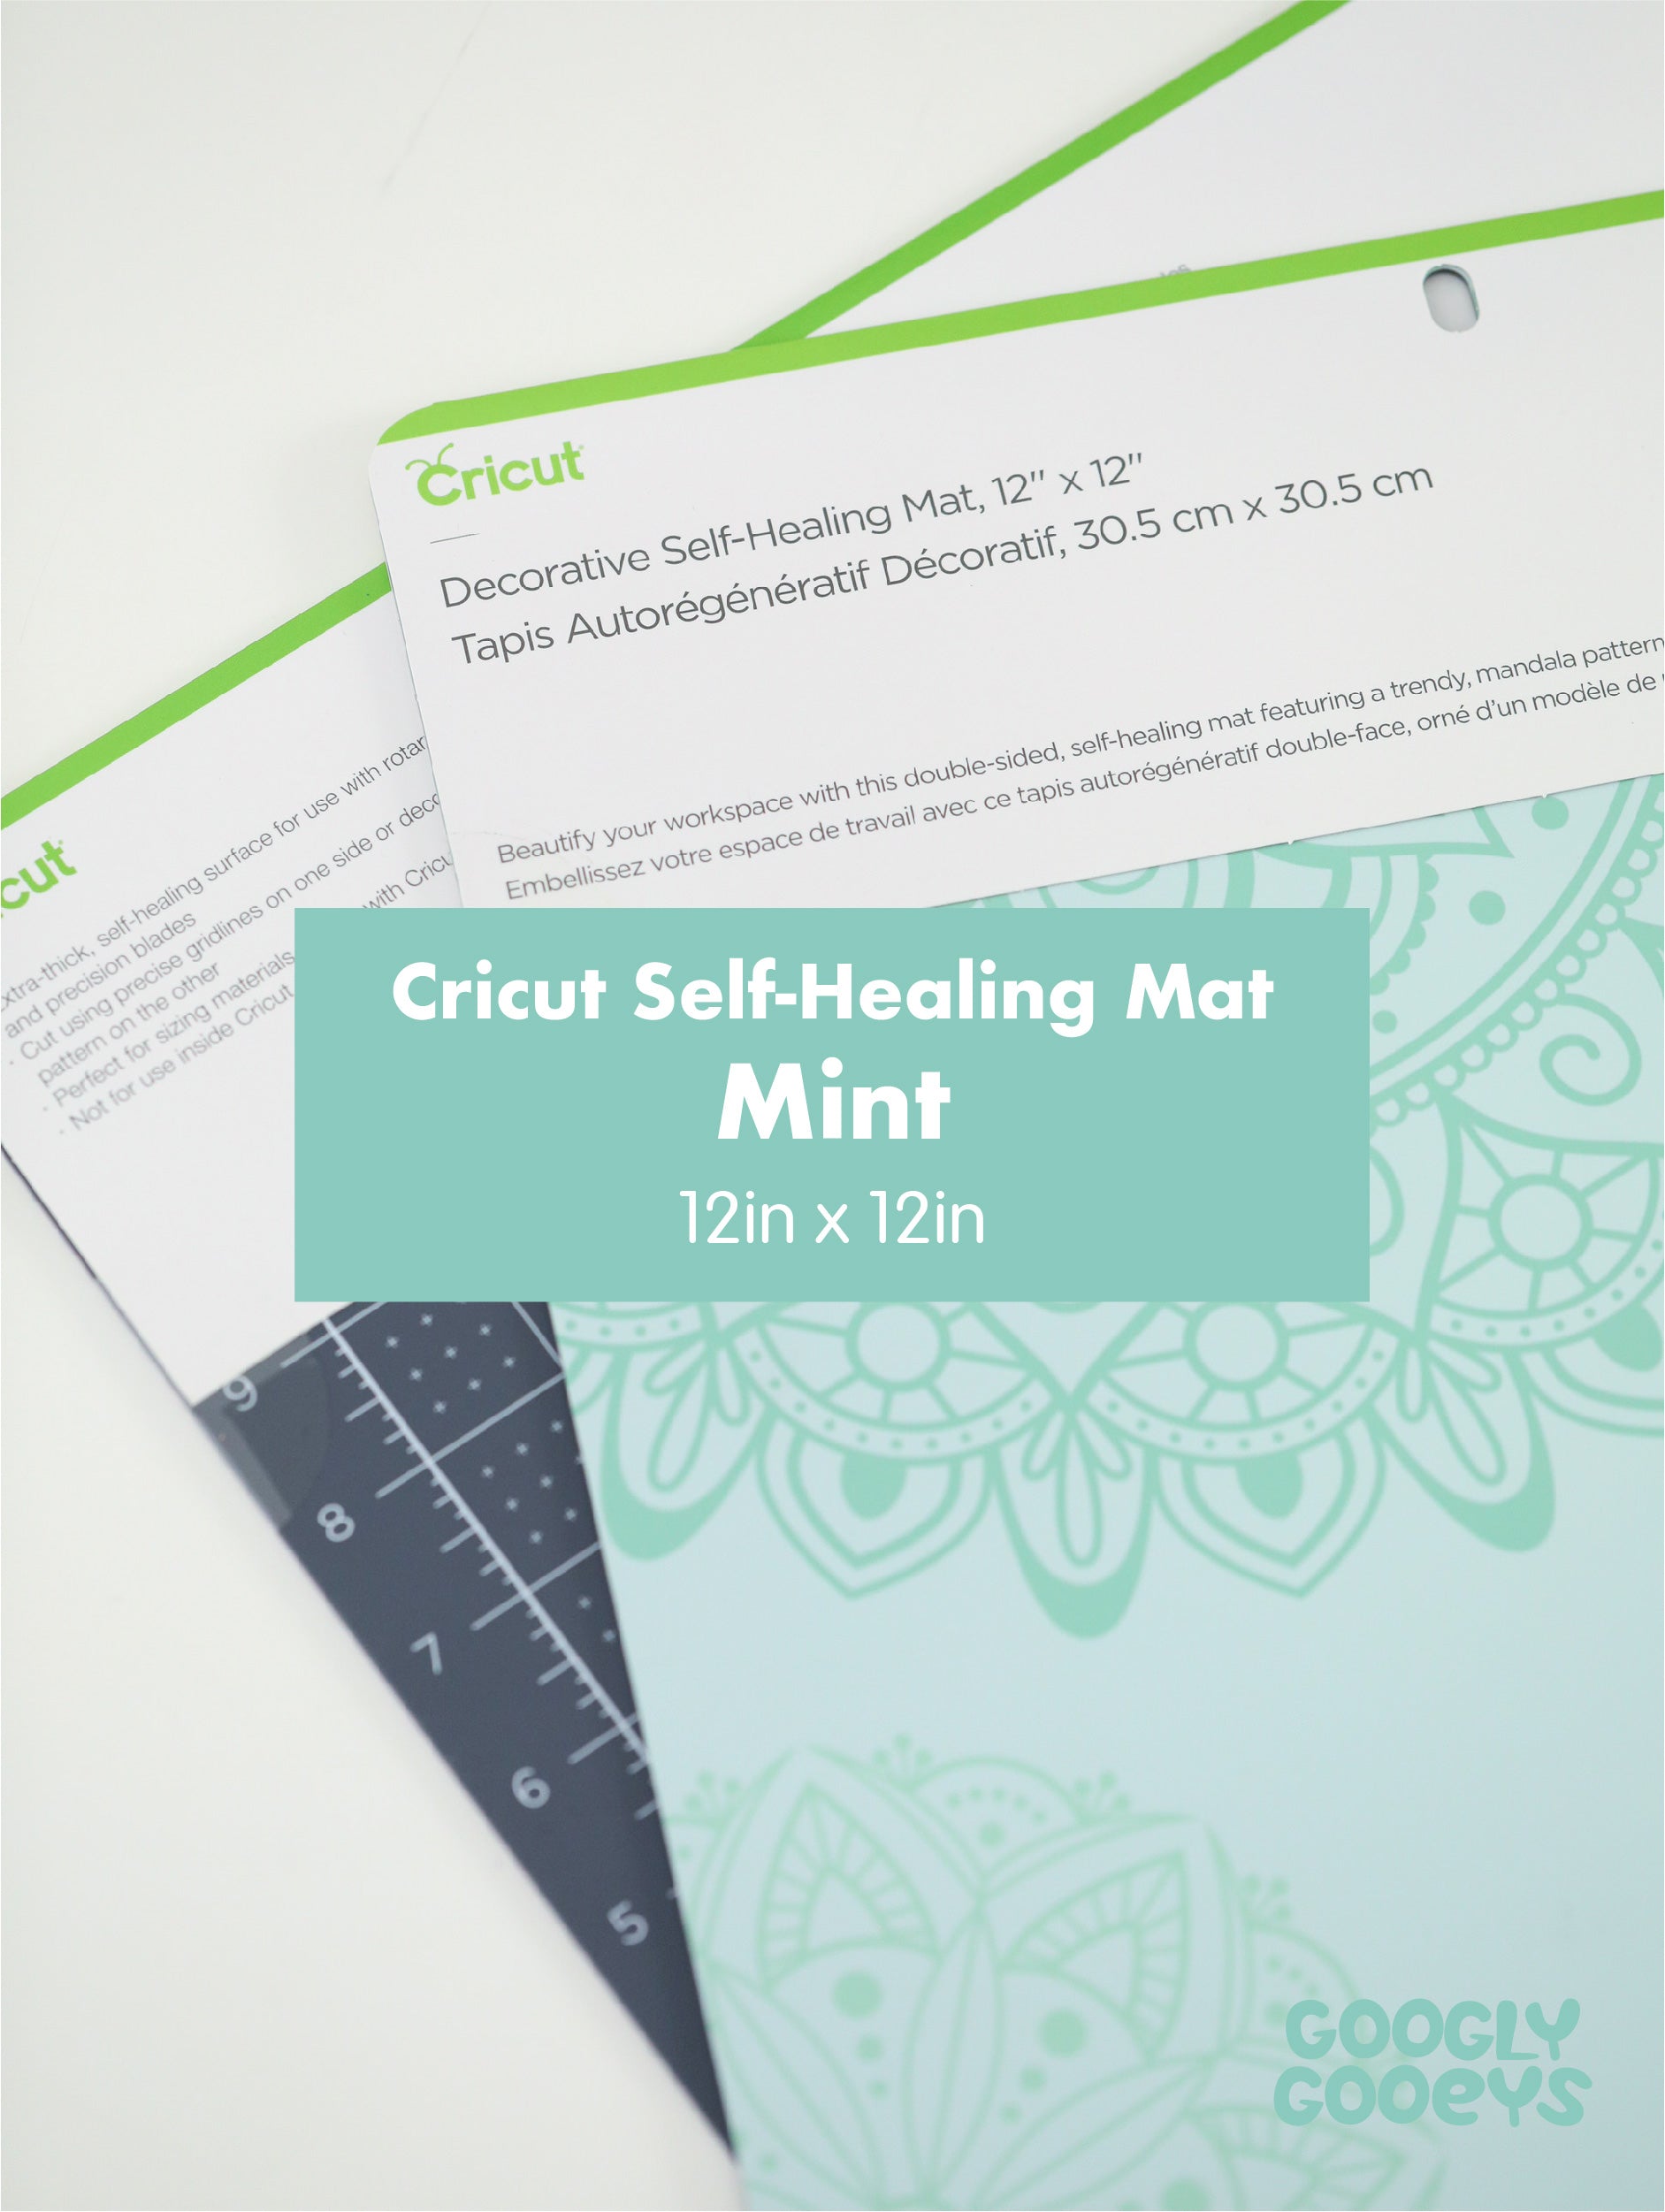 Cricut Mint Decorative Self Healing Mat 12x12 for Crafting DIY Projects